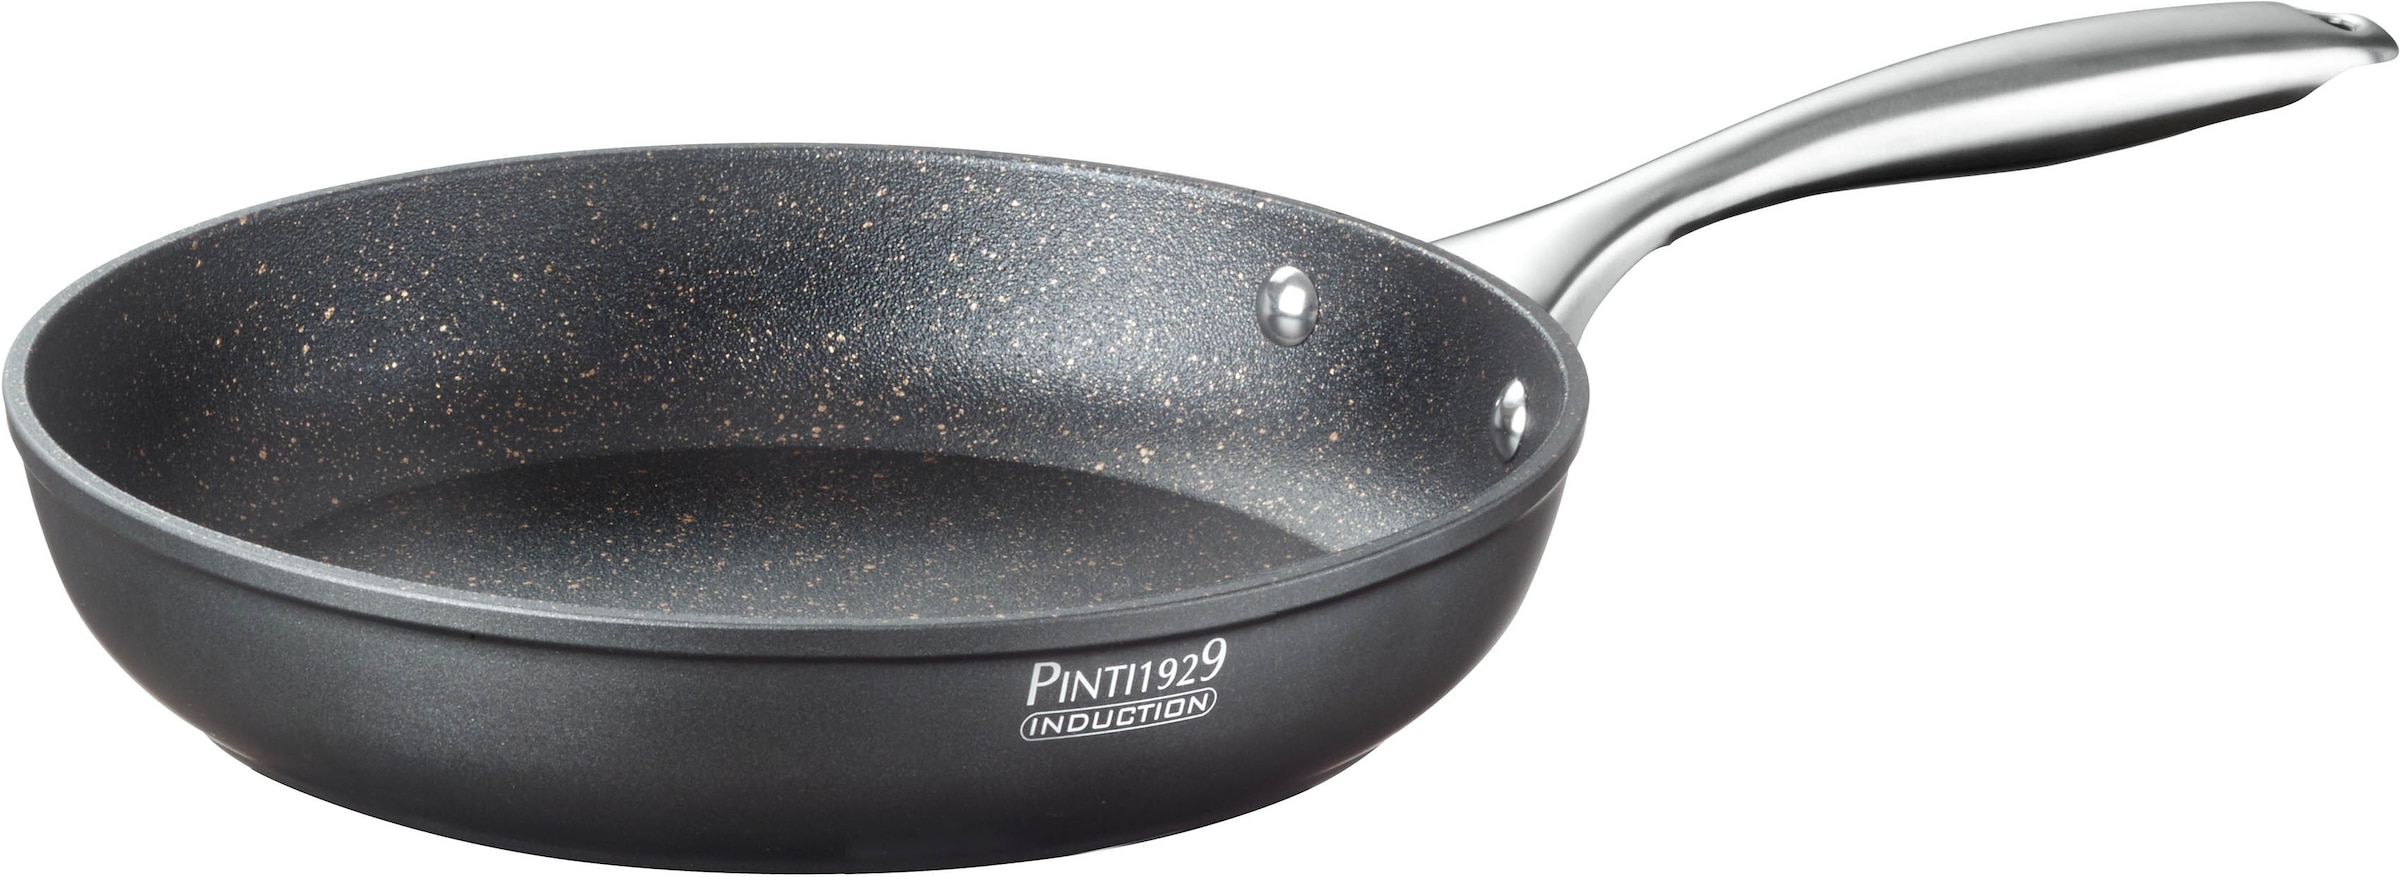 PINTINOX Bratpfanne »Pinti ST1«, Aluminium, 3-lagige Antihaftbeschichtung,  Induktionsgeeignet kaufen | BAUR